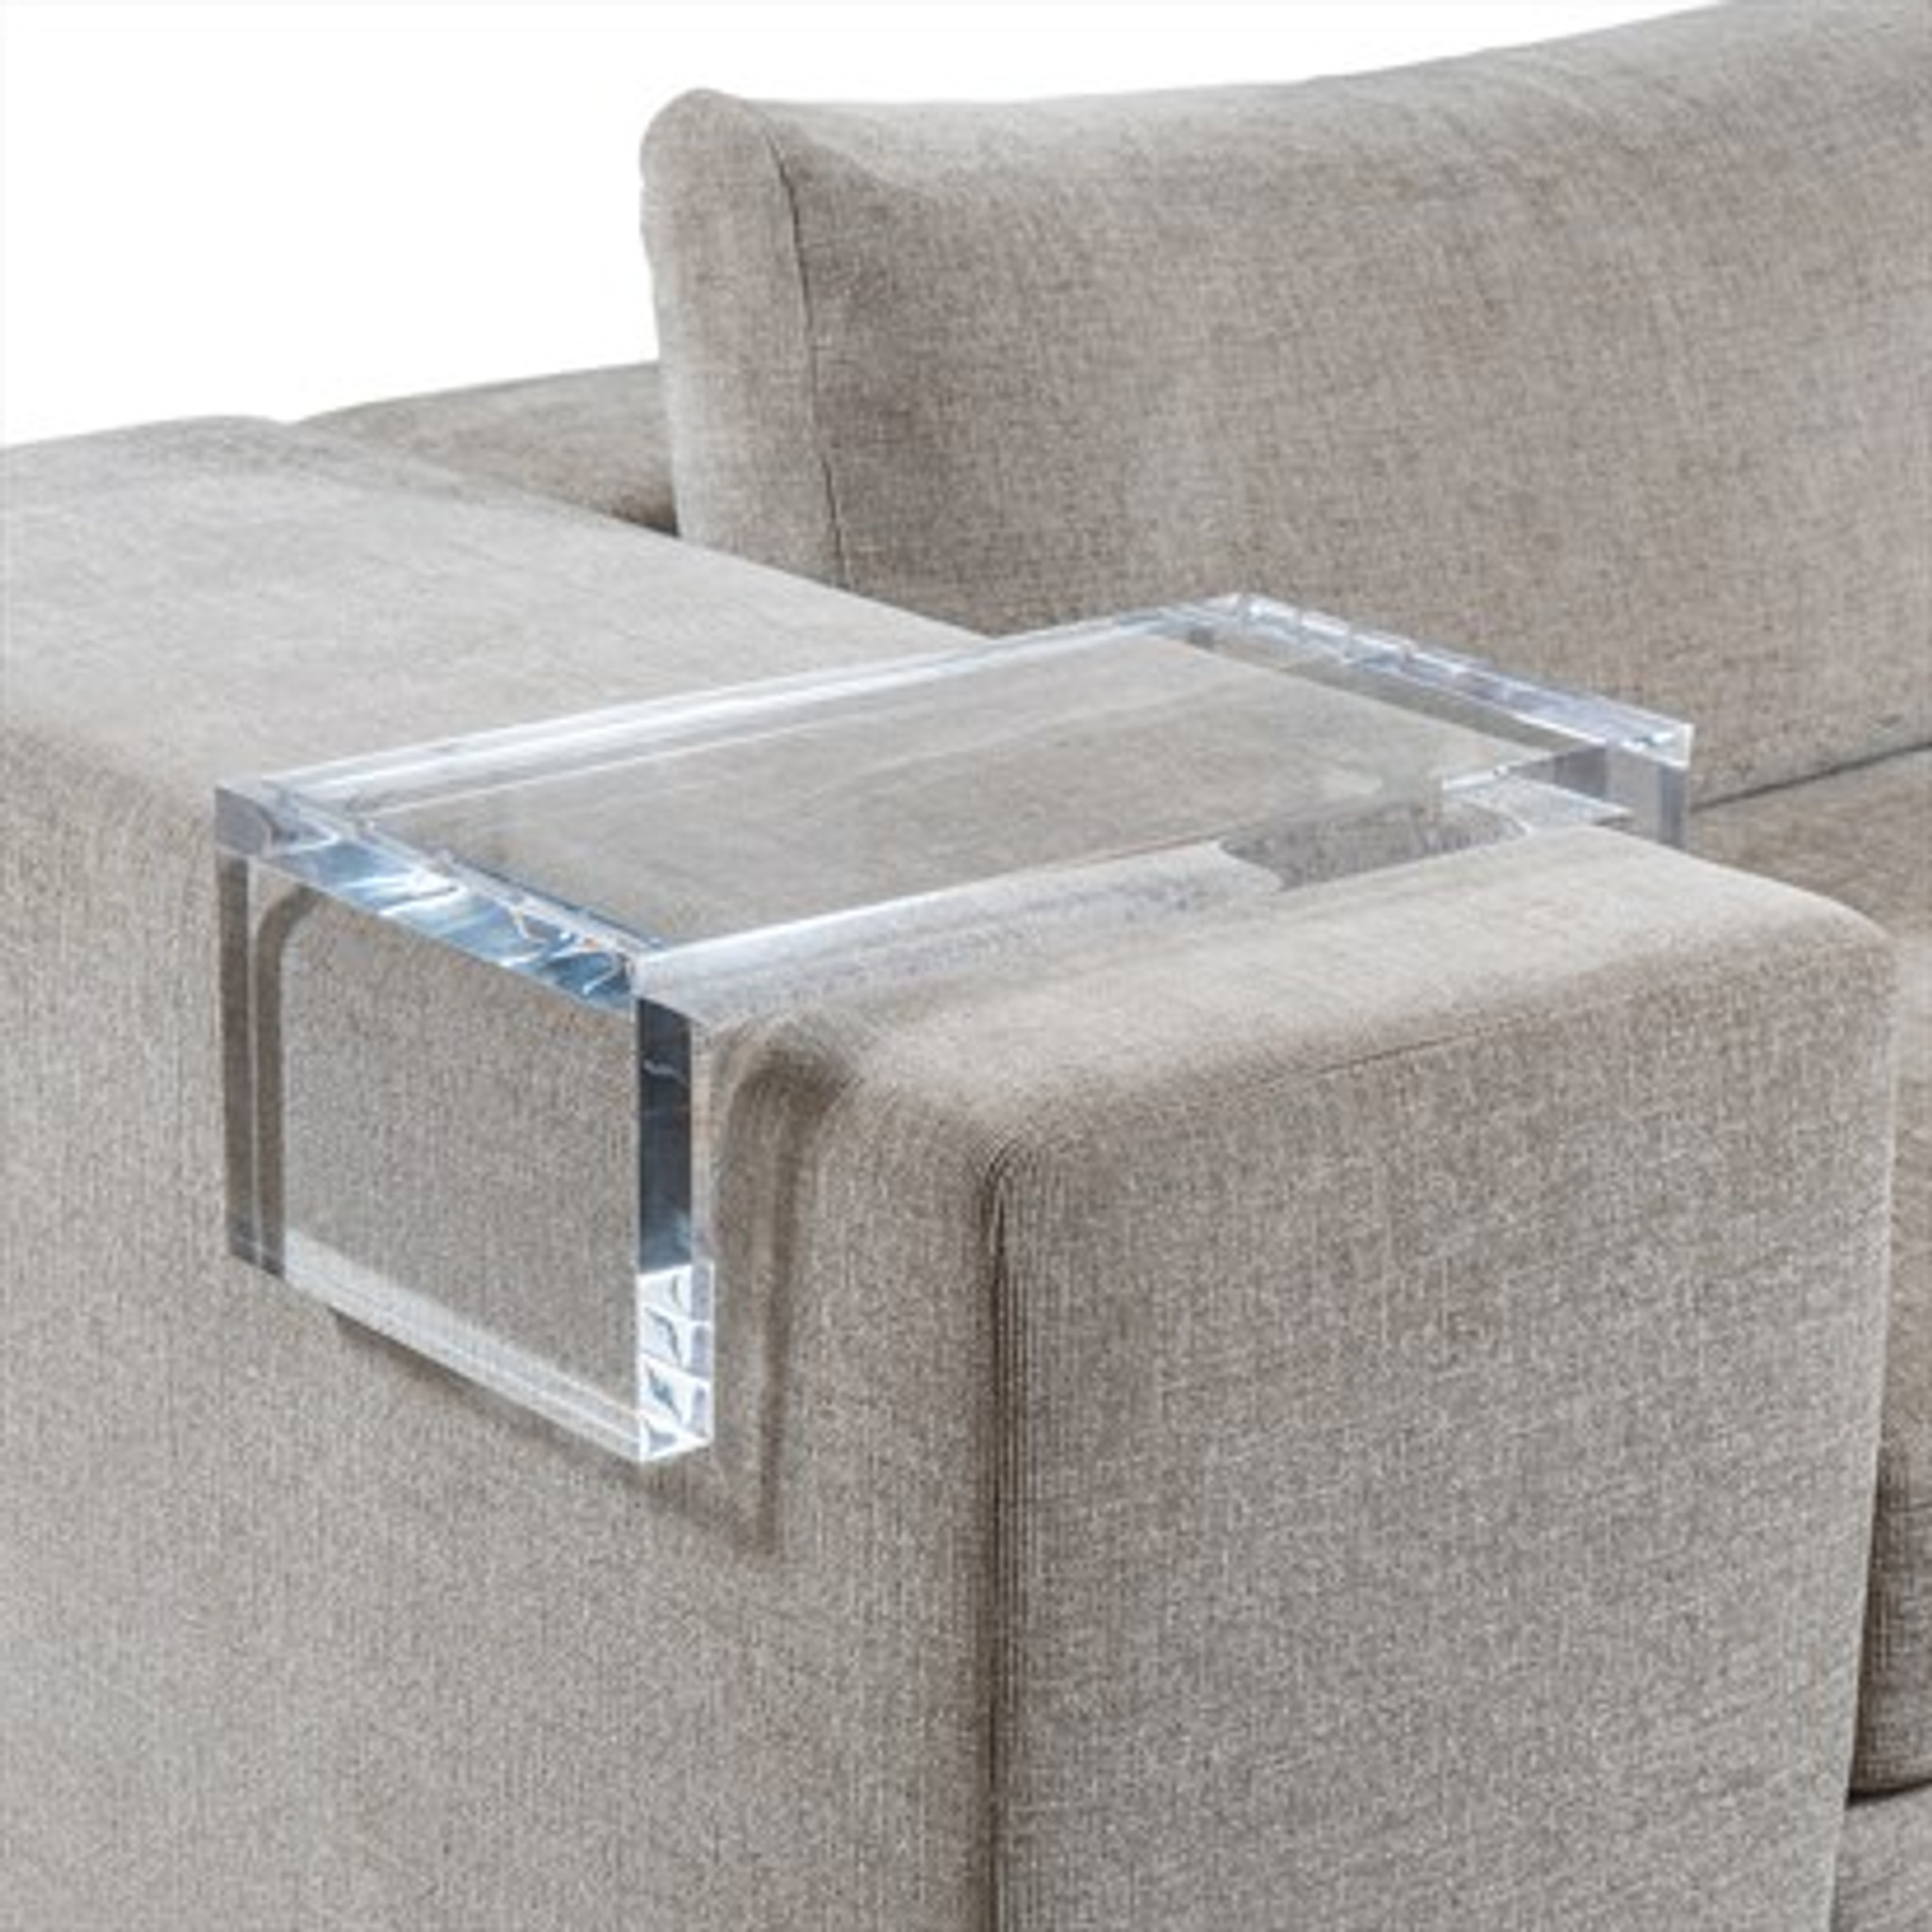 ik ben slaperig Balling Blijkbaar Clear Acrylic Sofa Armrest Drink Tray | Clear Home Design